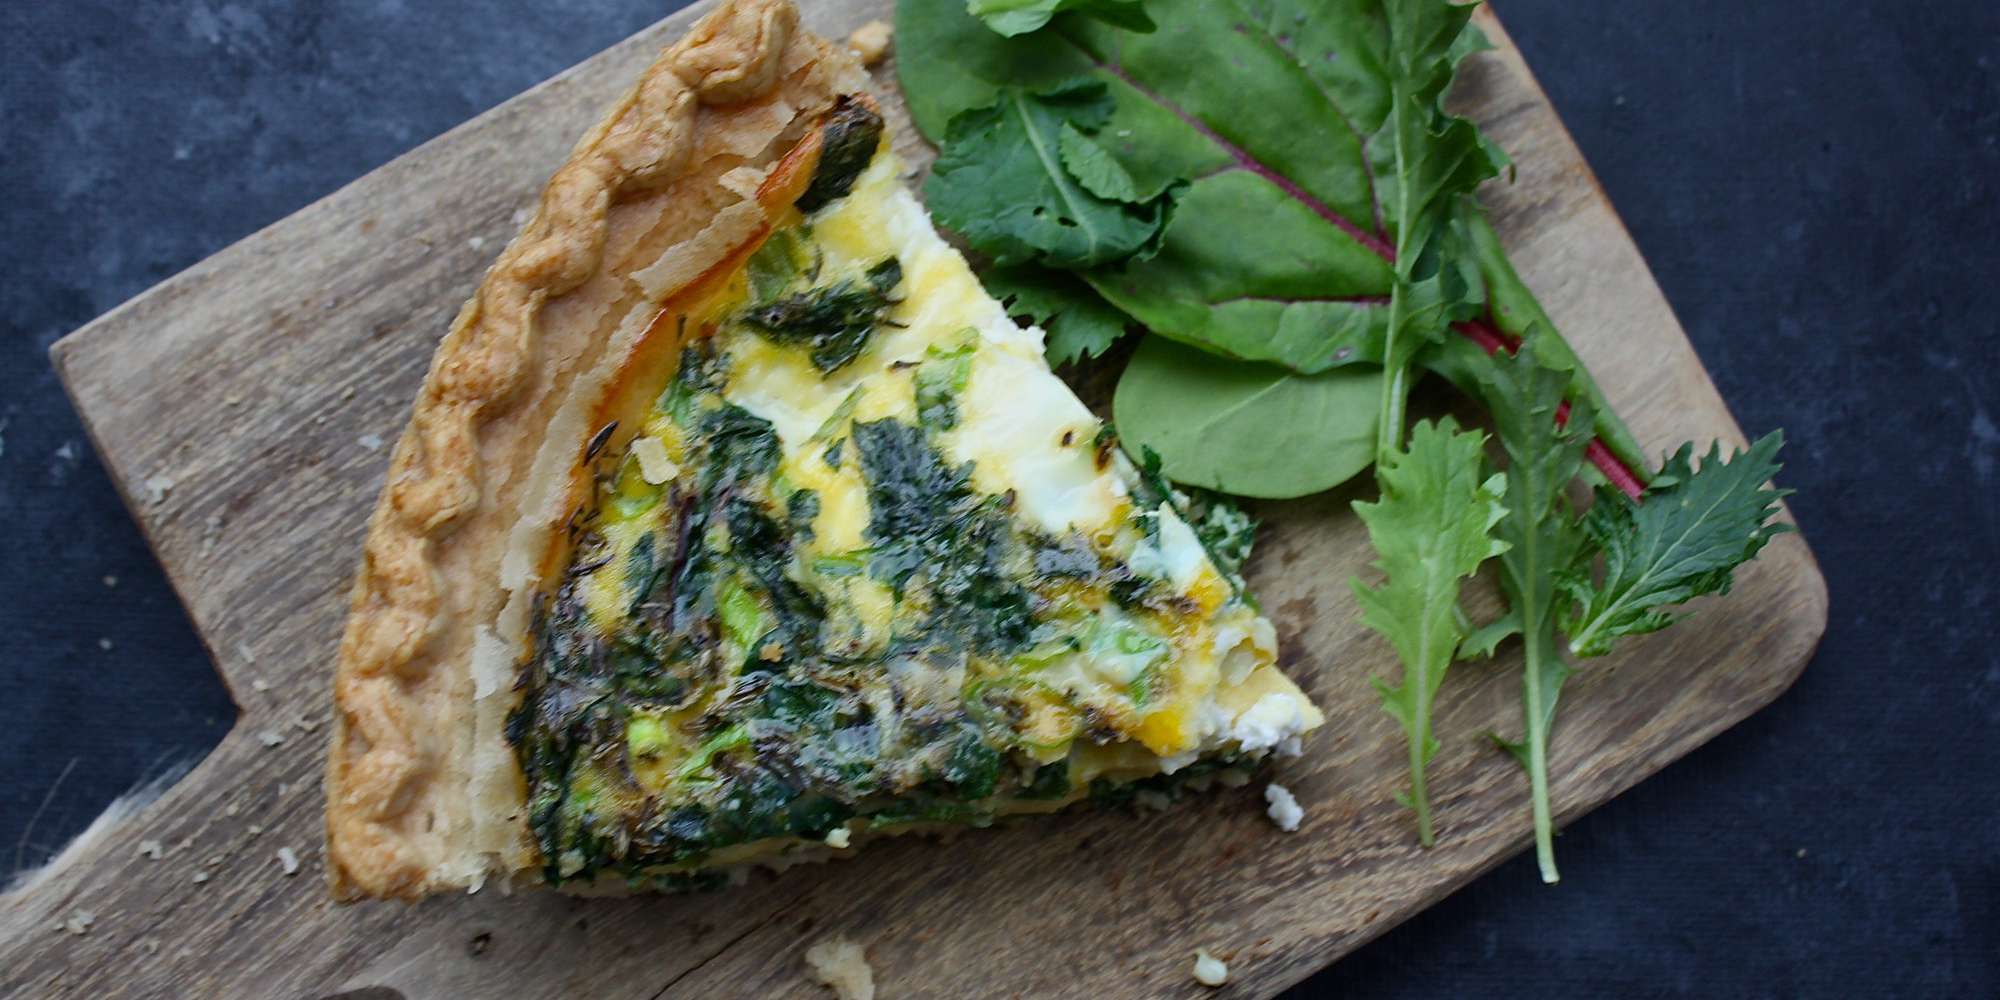 Spinach, Kale & Farmer’s Cheese Quiche